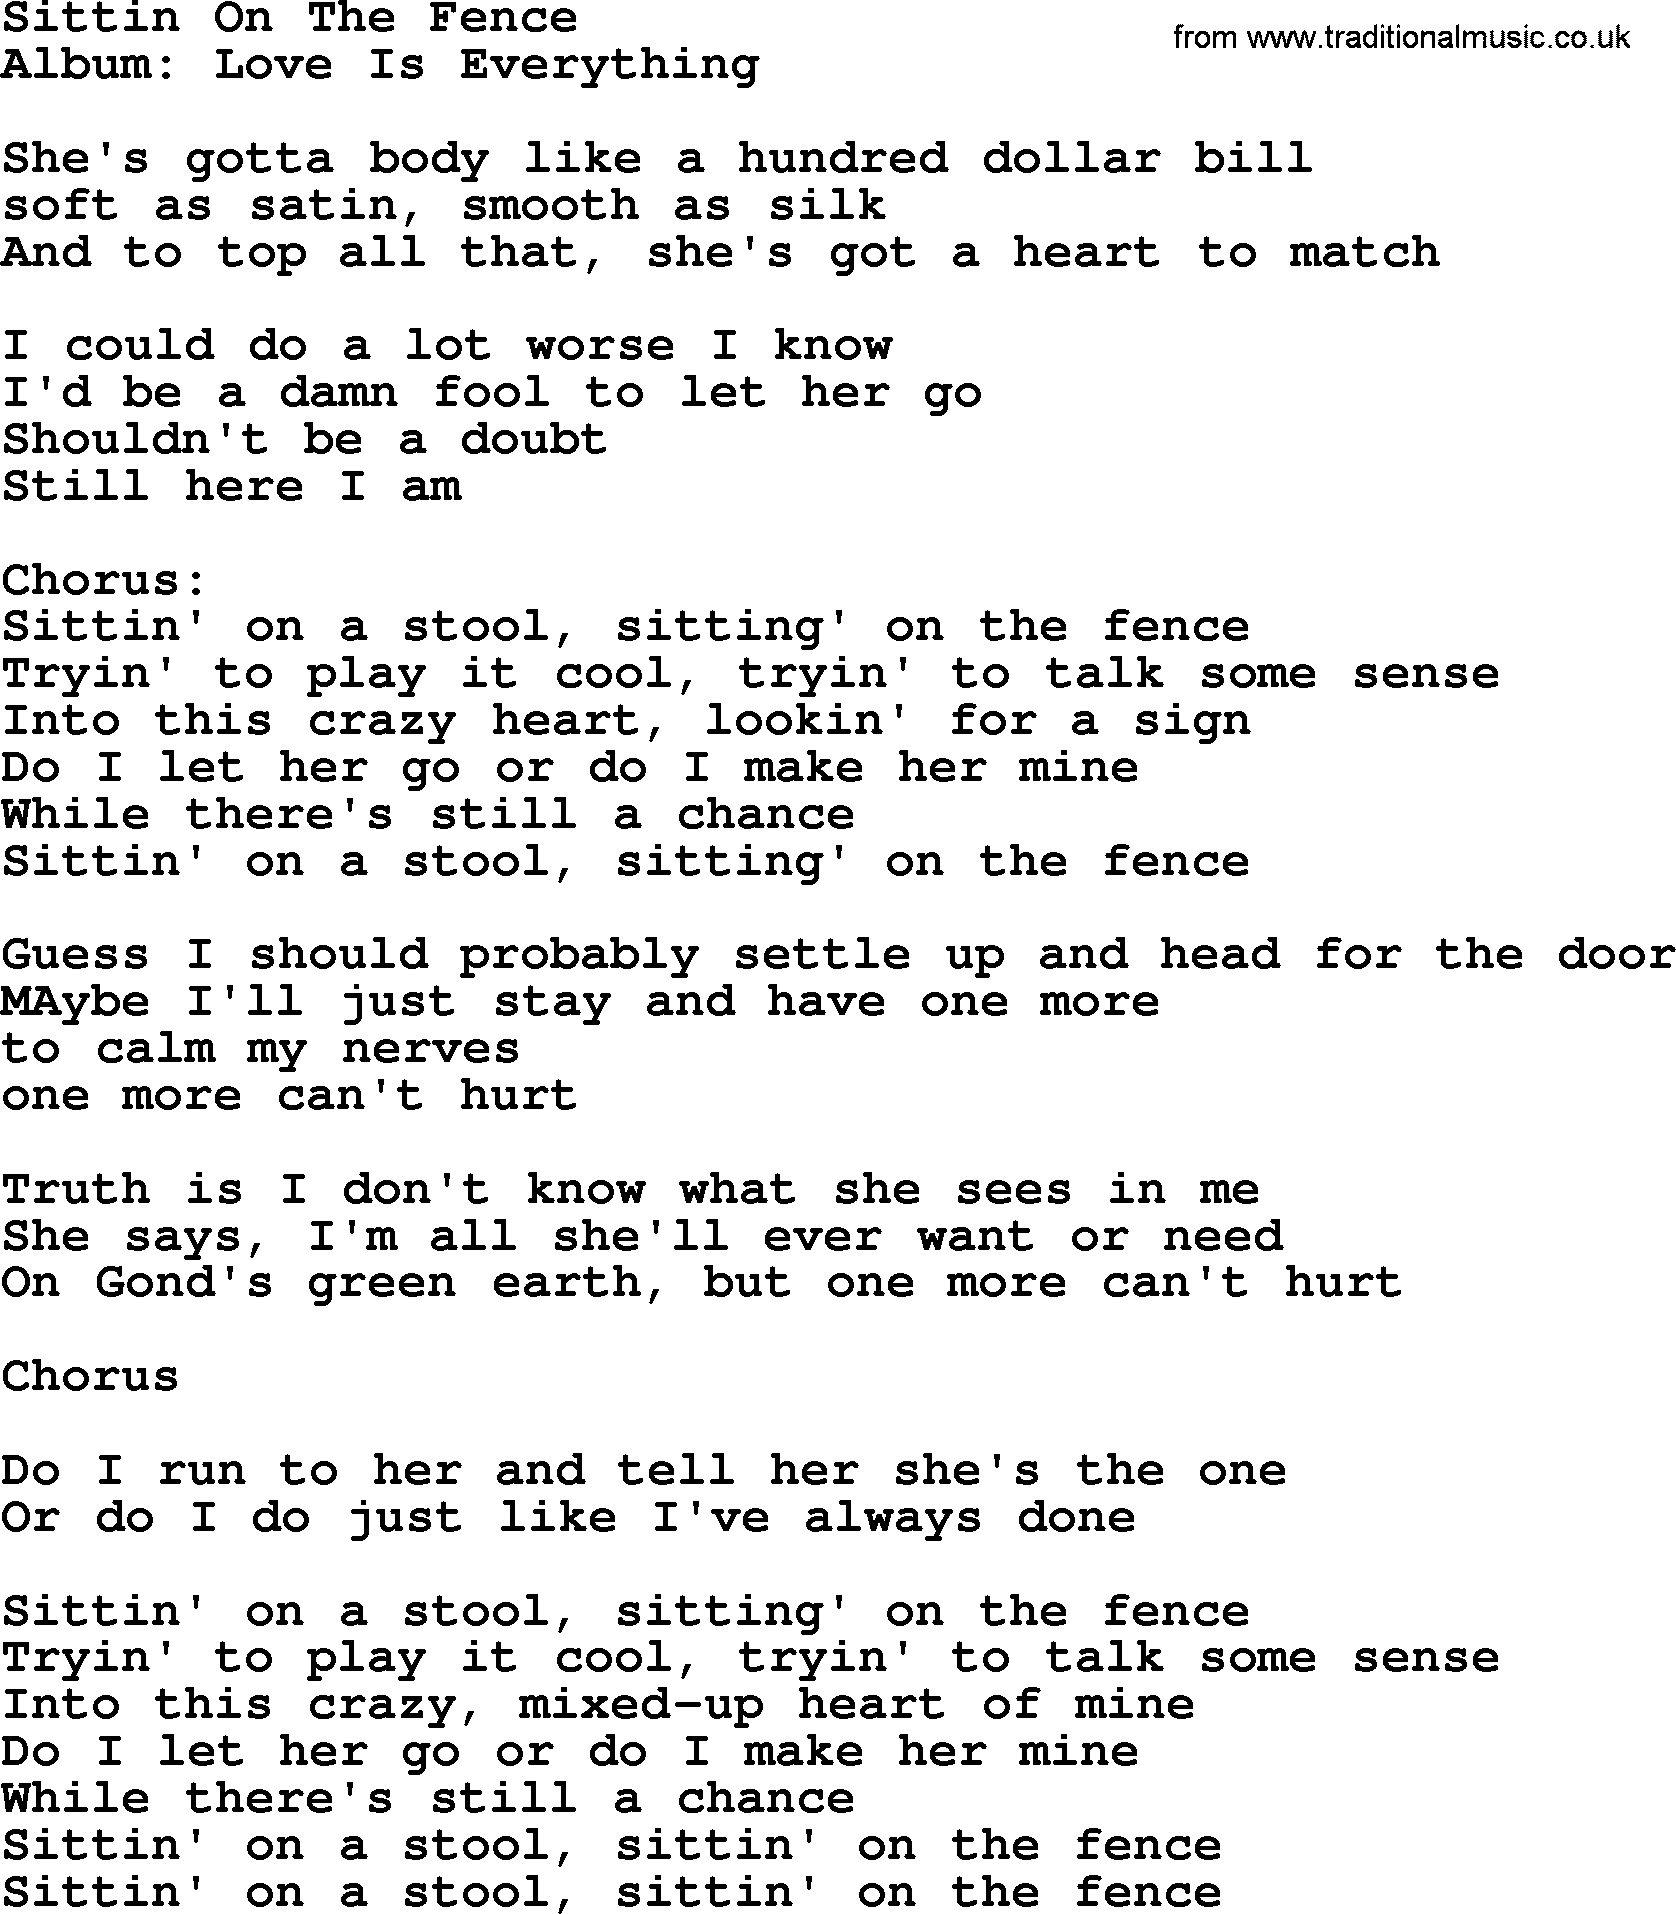 George Strait song: Sittin On The Fence, lyrics